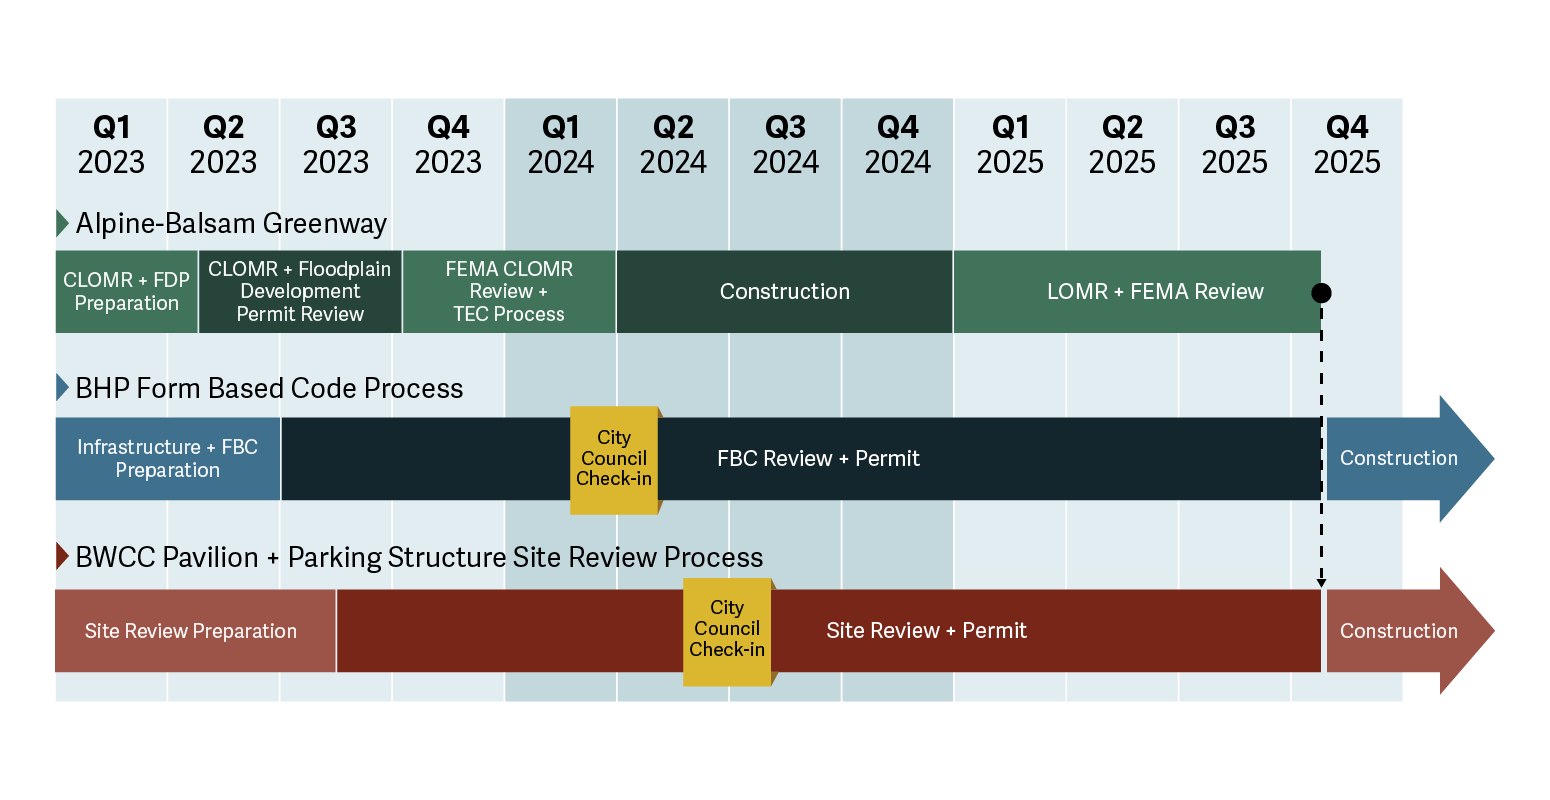 2023 to 2025 timeline for Alpine-Balsam site